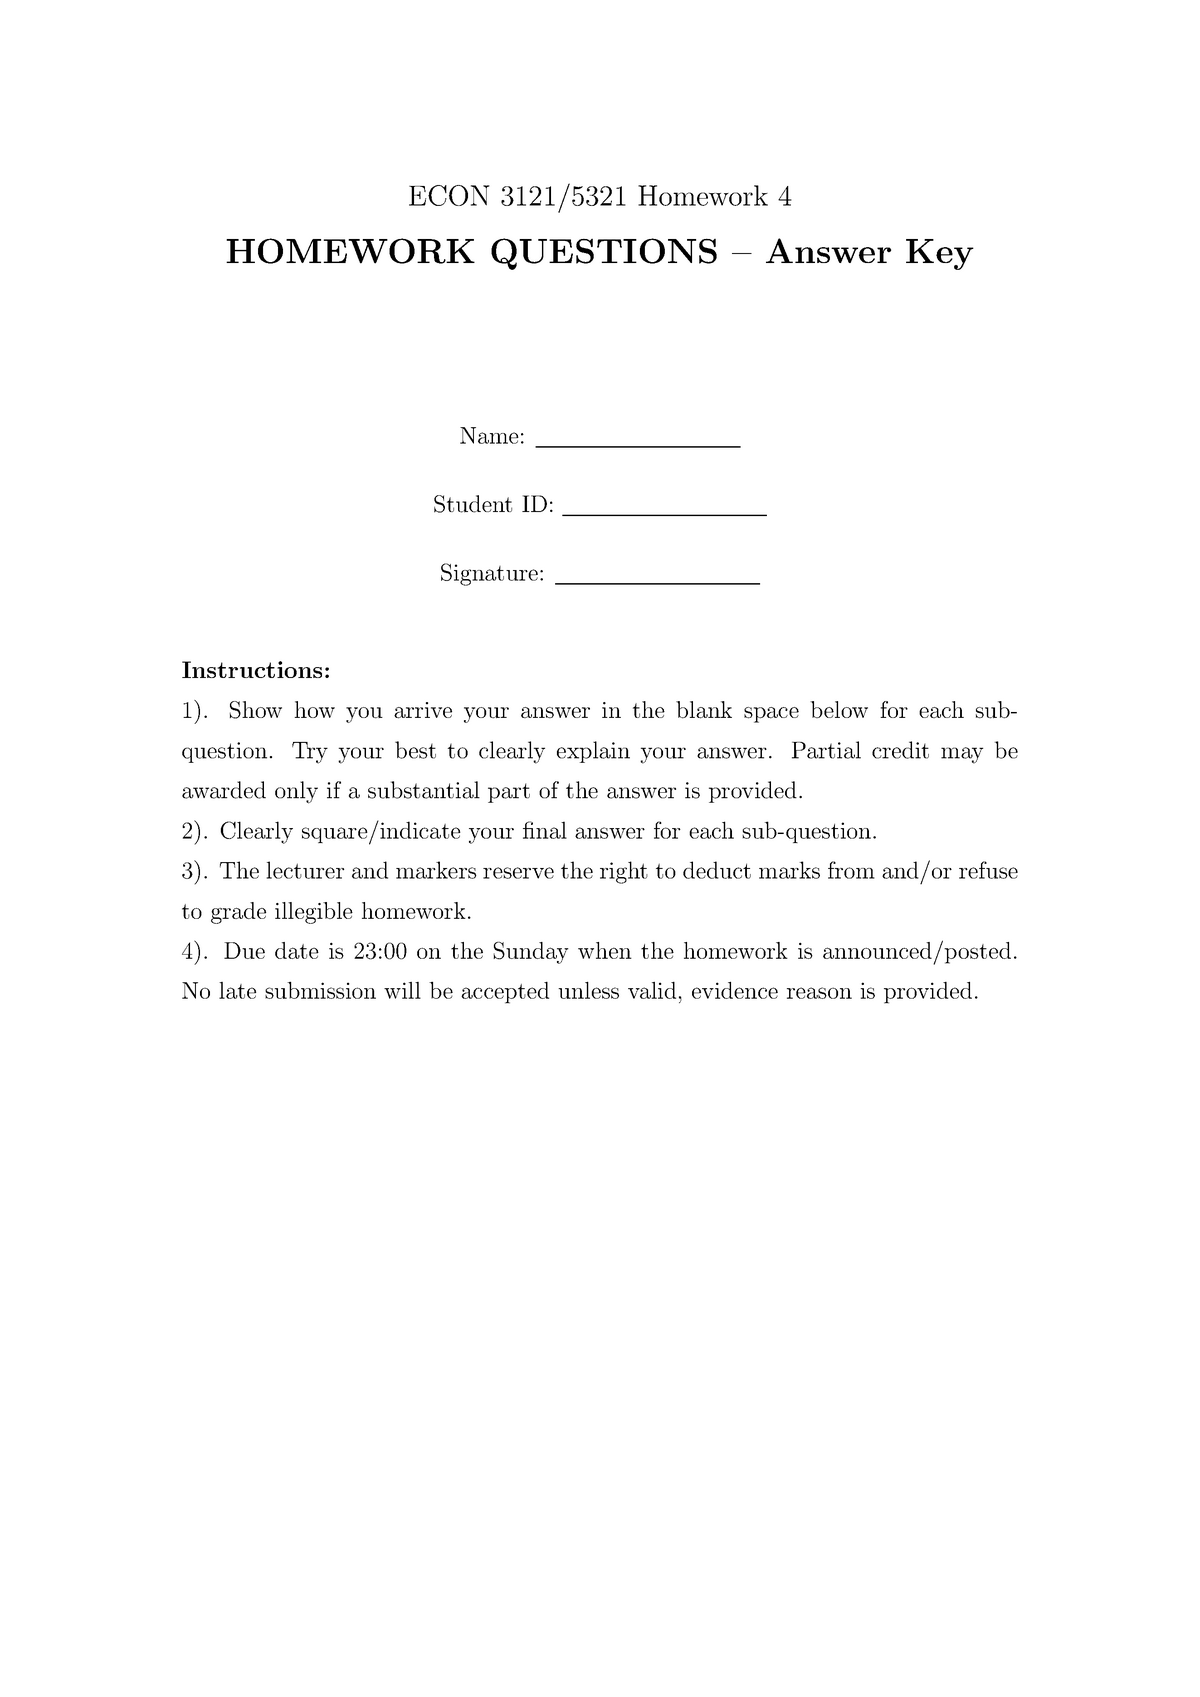 homework 4.4 answer key